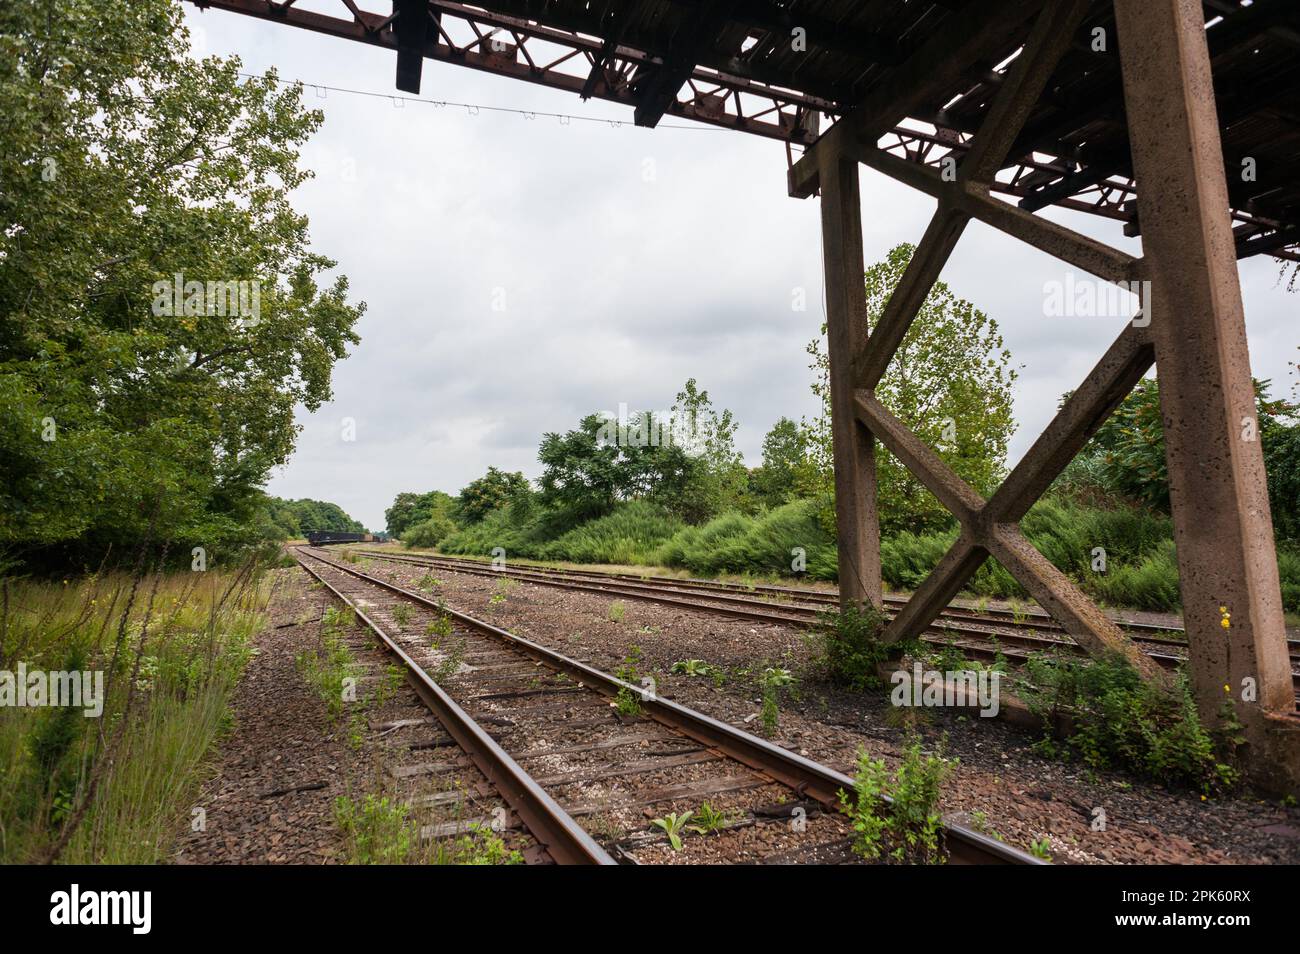 Railroad siding in railyard under abandoned bridge Stock Photo